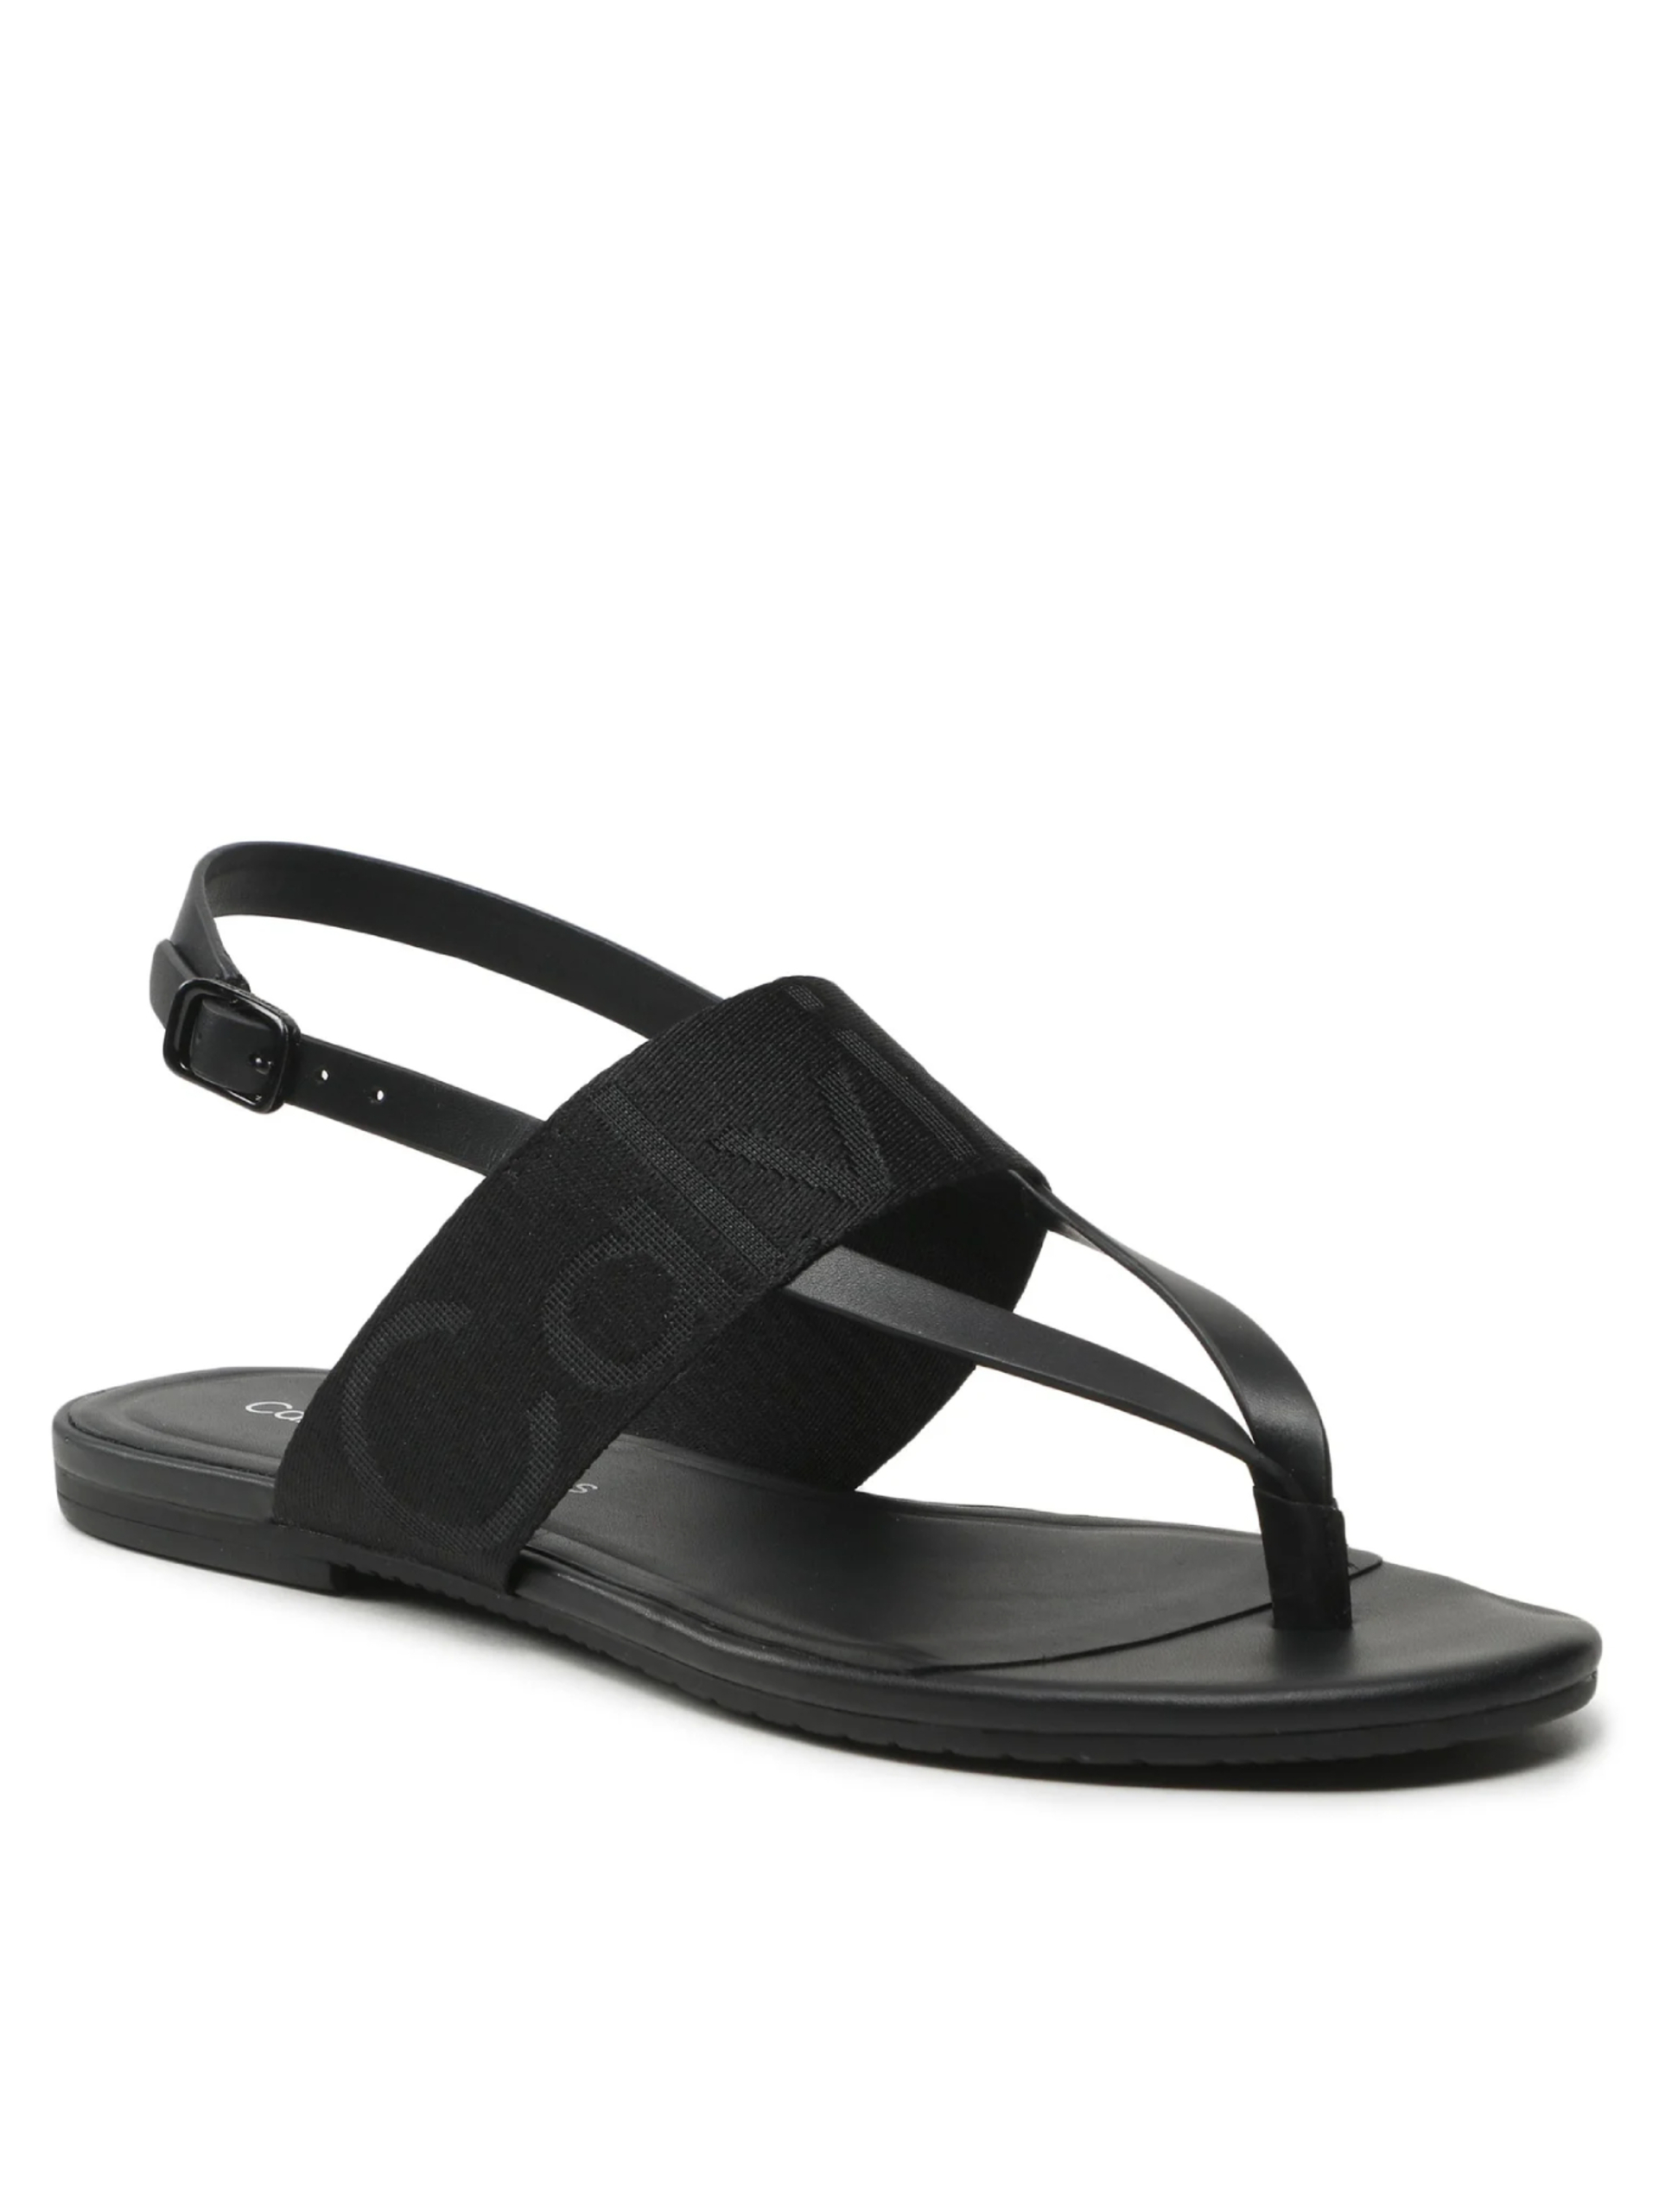 Calvin Klein dámské černé sandály FLAT SANDAL TOEPOST WEBBING - 38 (BDS)